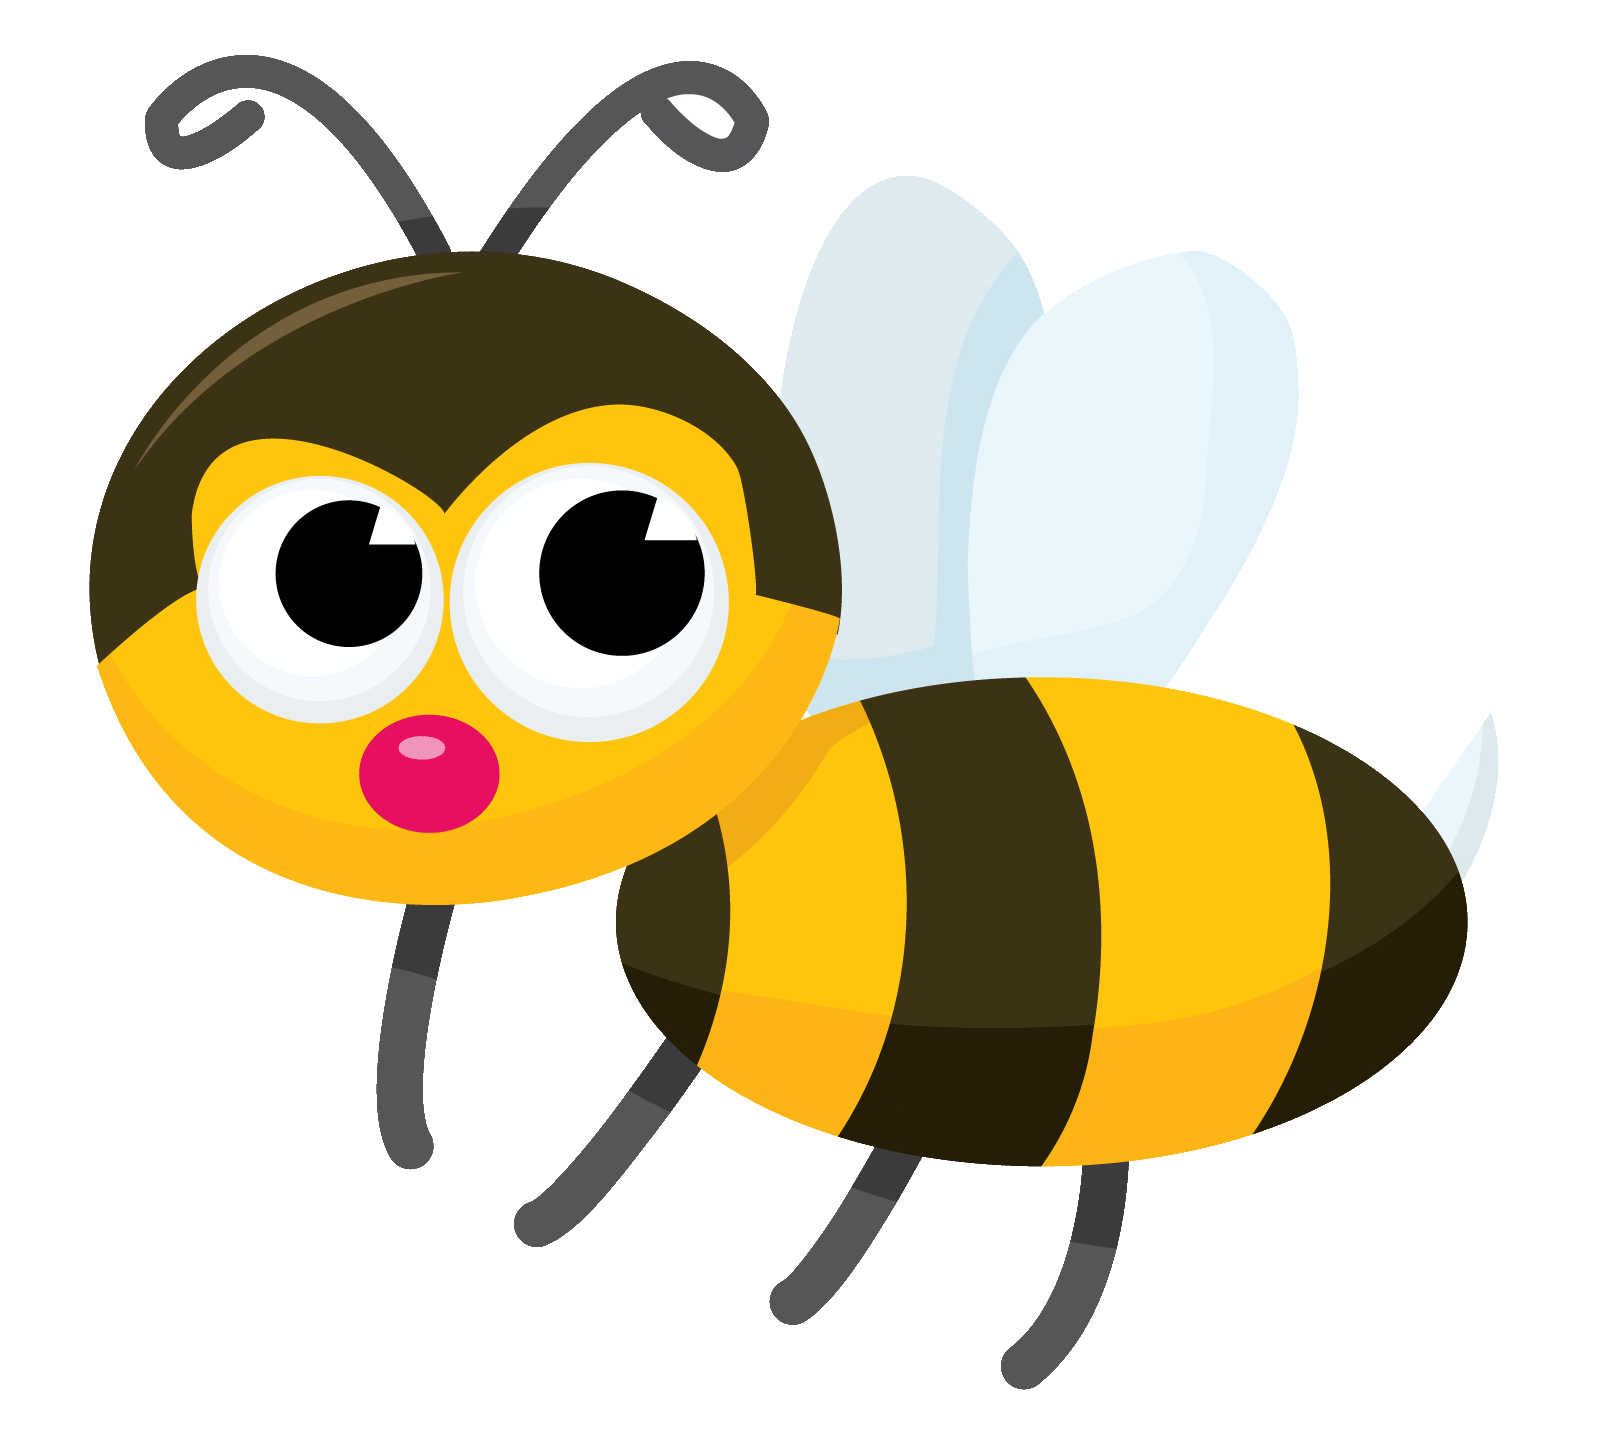 Bee Cartoon Image Cliparts.co